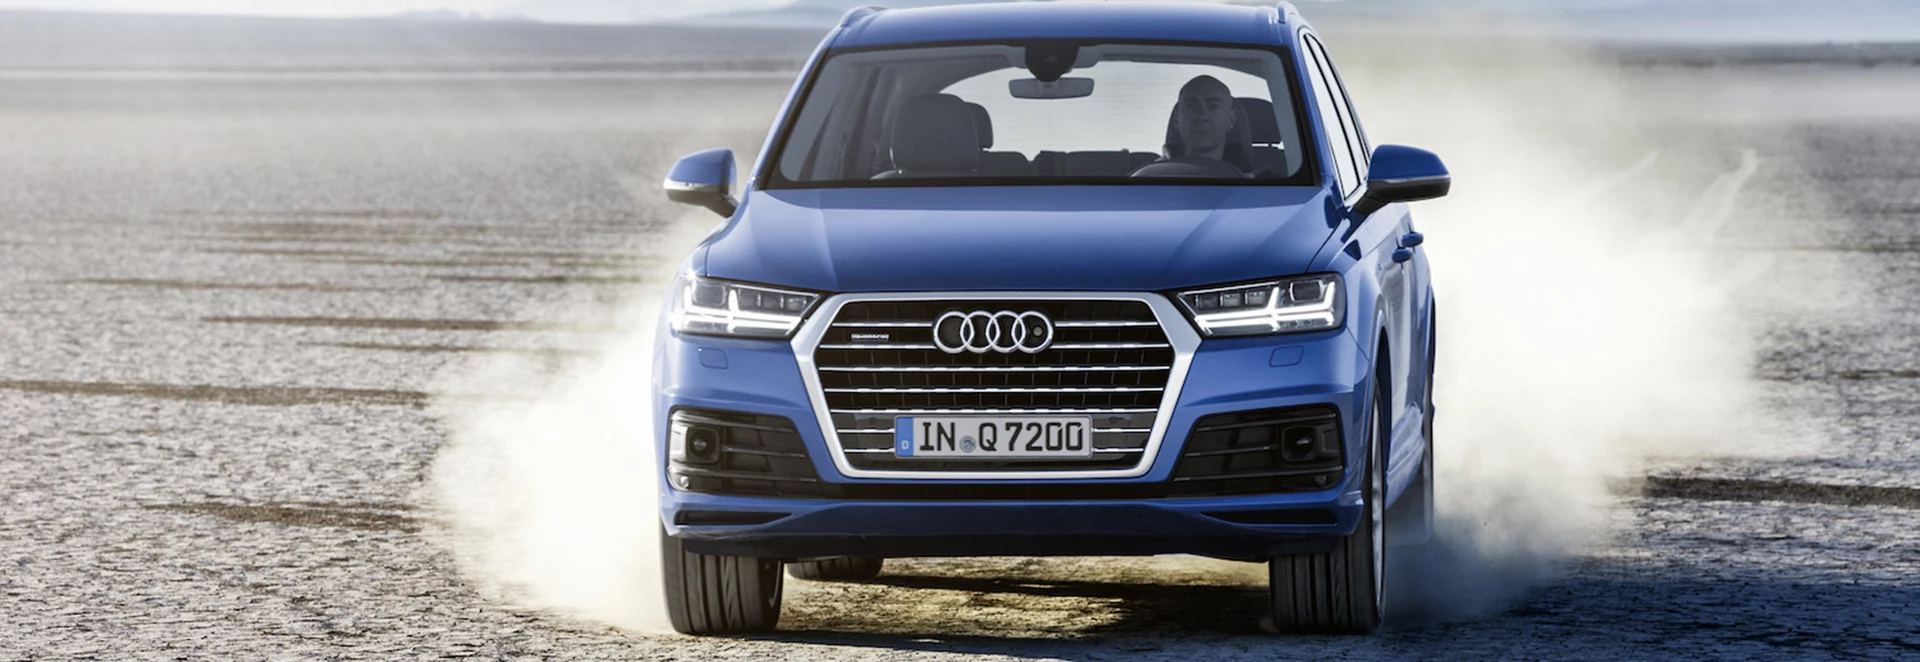 Audi Q7 2019 review